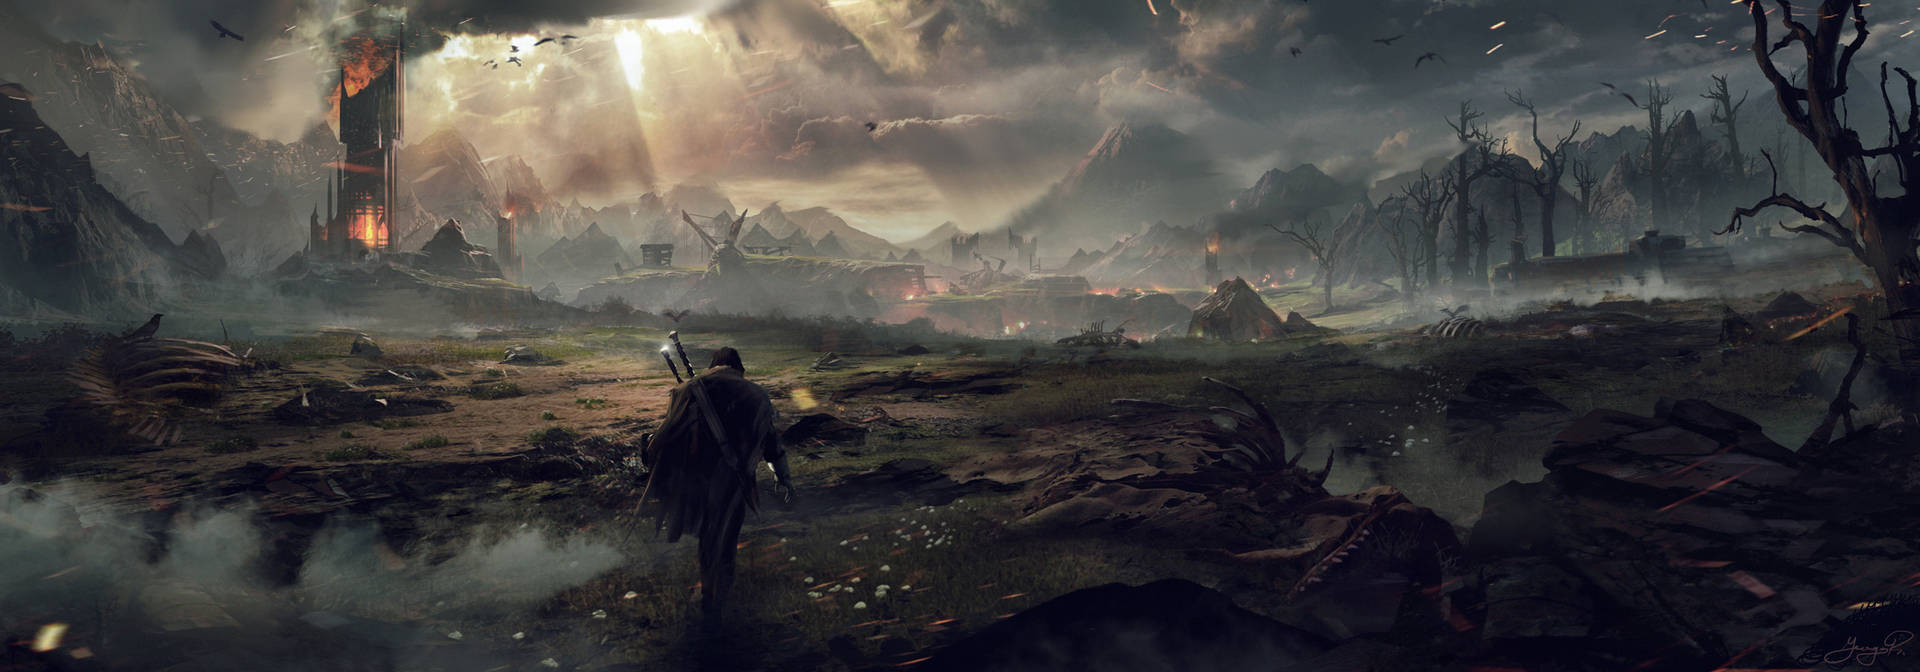 Talion's Epic Battlefield in Middle-Earth: Shadow of Mordor 4K Wallpaper